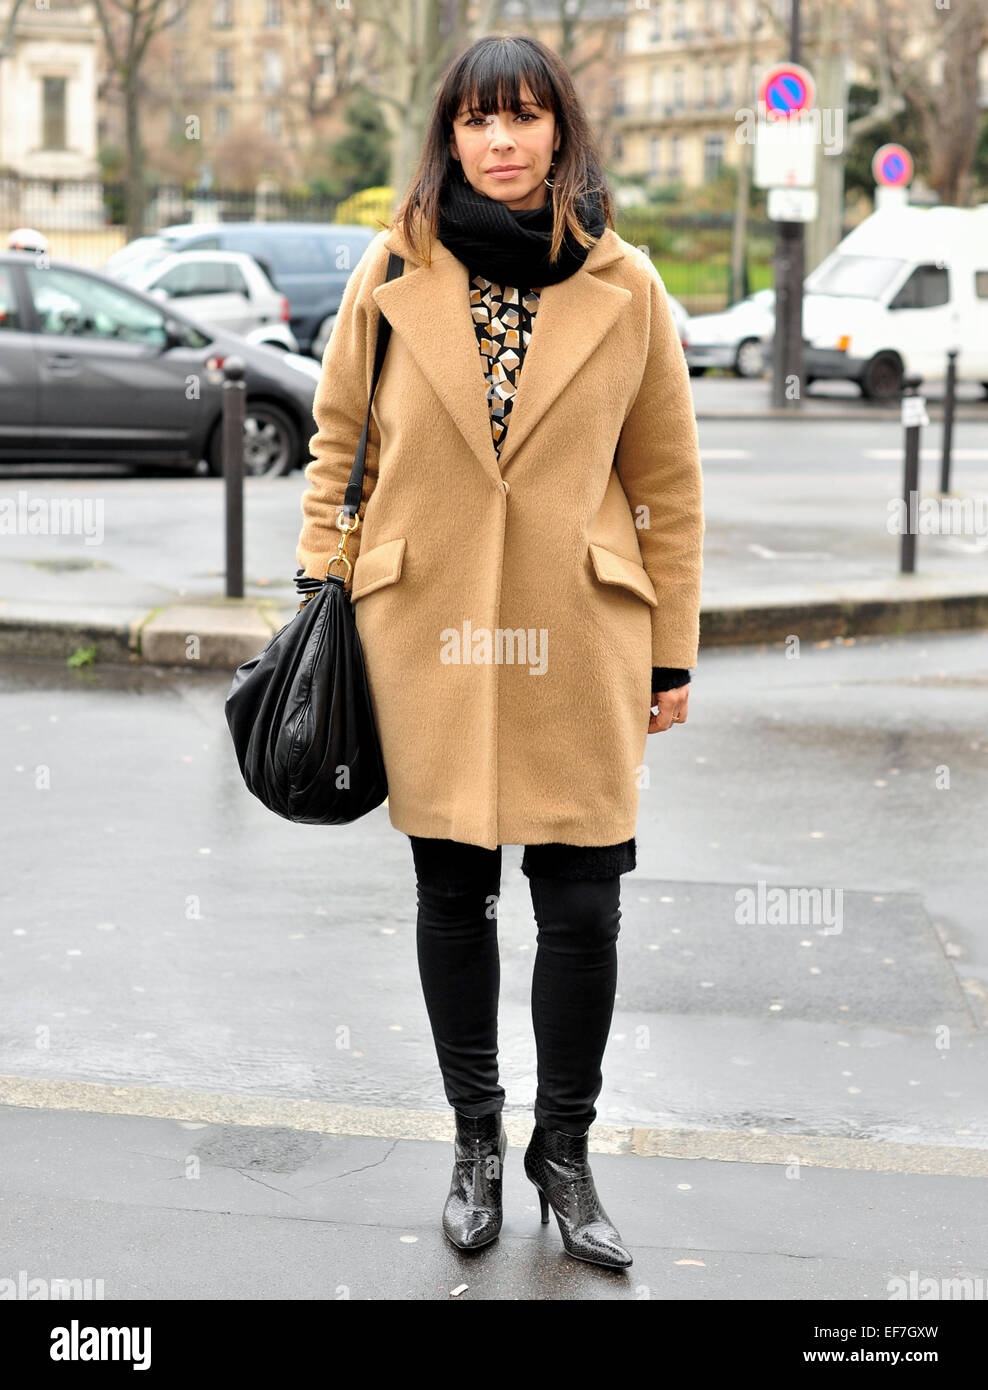 Mathilda May arriving at the Schiaparelli runway show during Paris Haute Couture Fashion Week in Paris - Jan 26, 2015 - Photo: Runway Manhattan/Celine Gaille/picture alliance Stock Photo